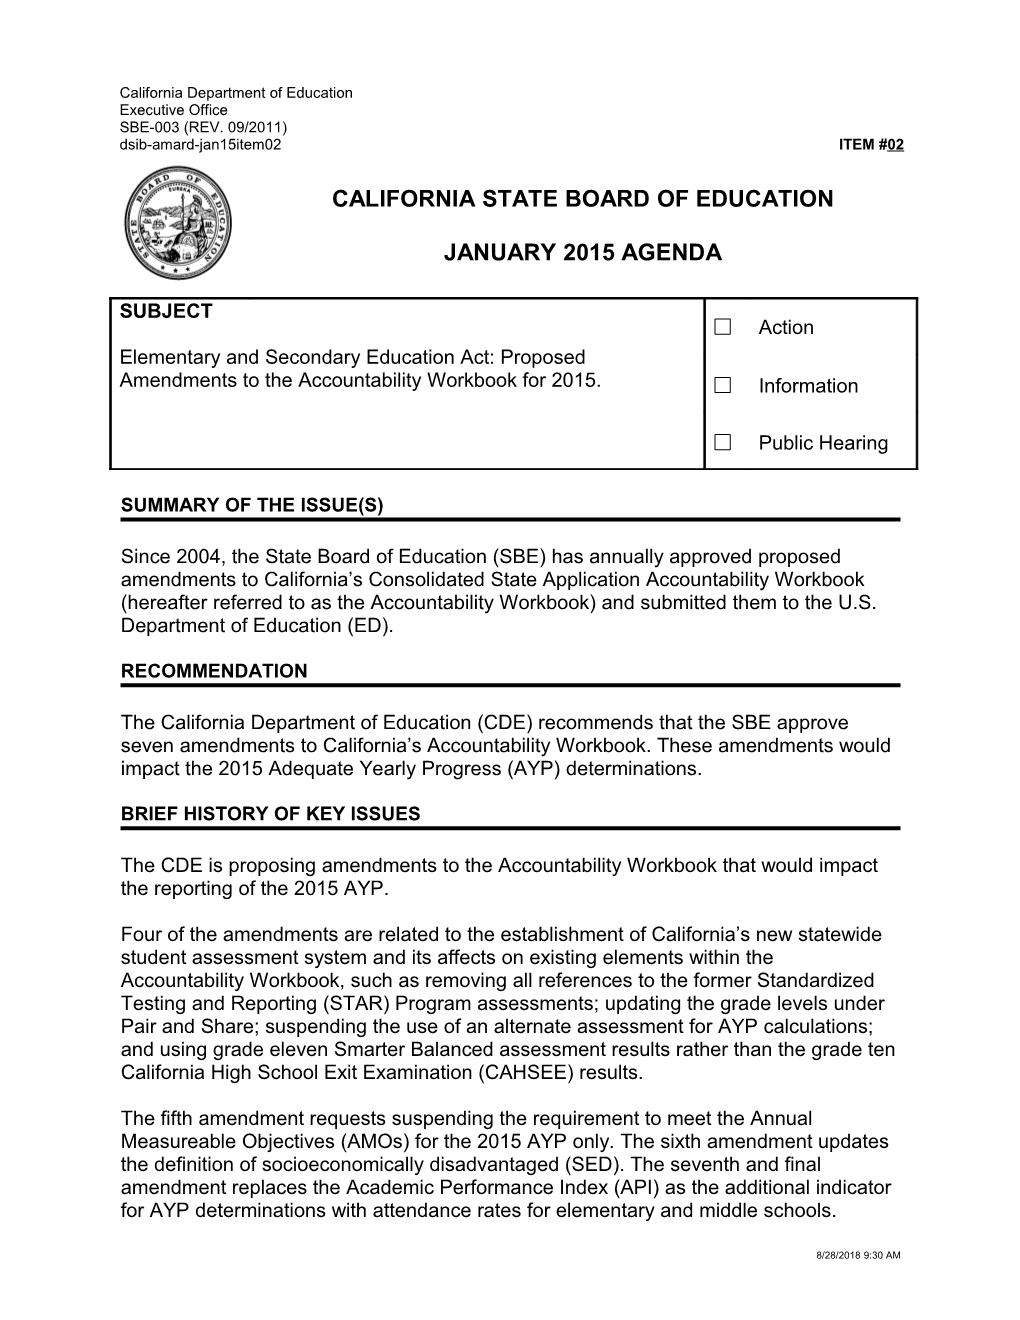 January 2015 Agenda Item 02 - Meeting Agendas (CA State Board of Education)